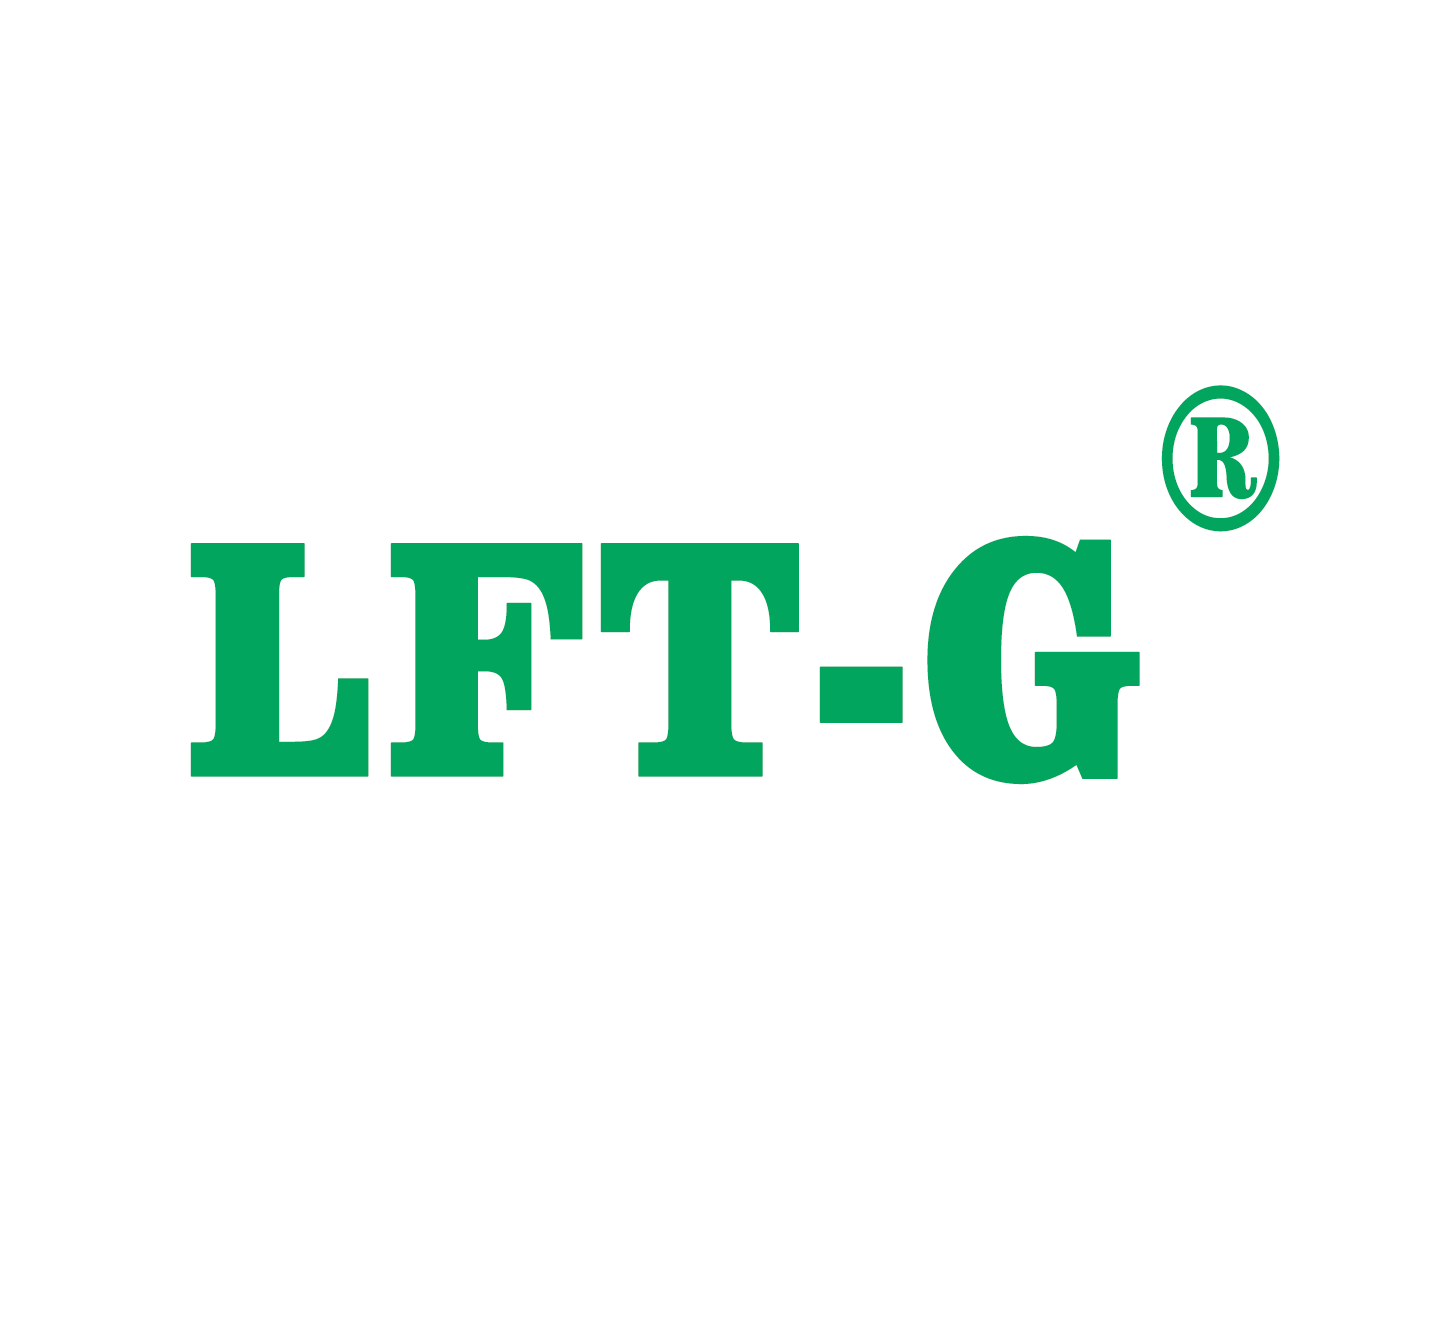  LFT-G 새해에 새로운 여행을 시작하다